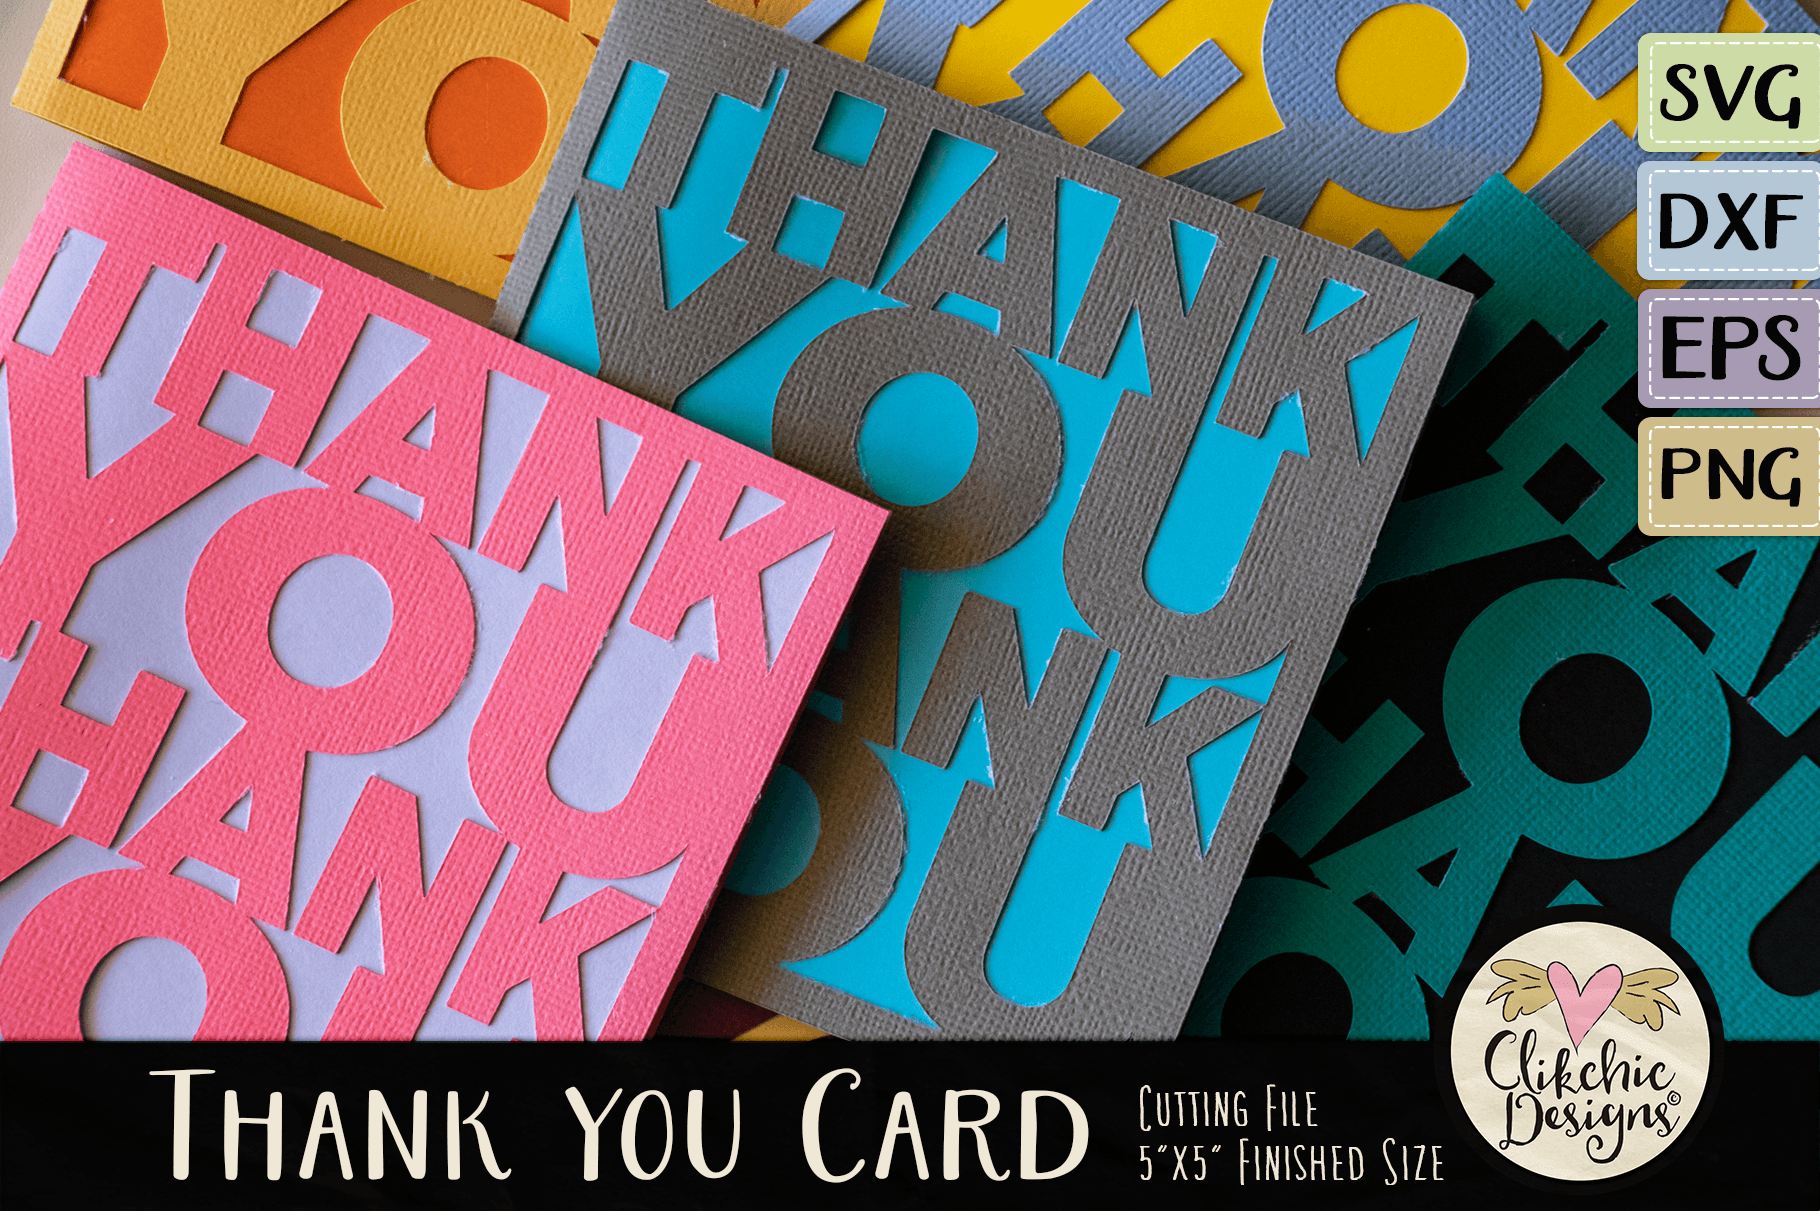 Thank You Card Svg Cutting File Tutorial By Clikchic Designs Thehungryjpeg Com